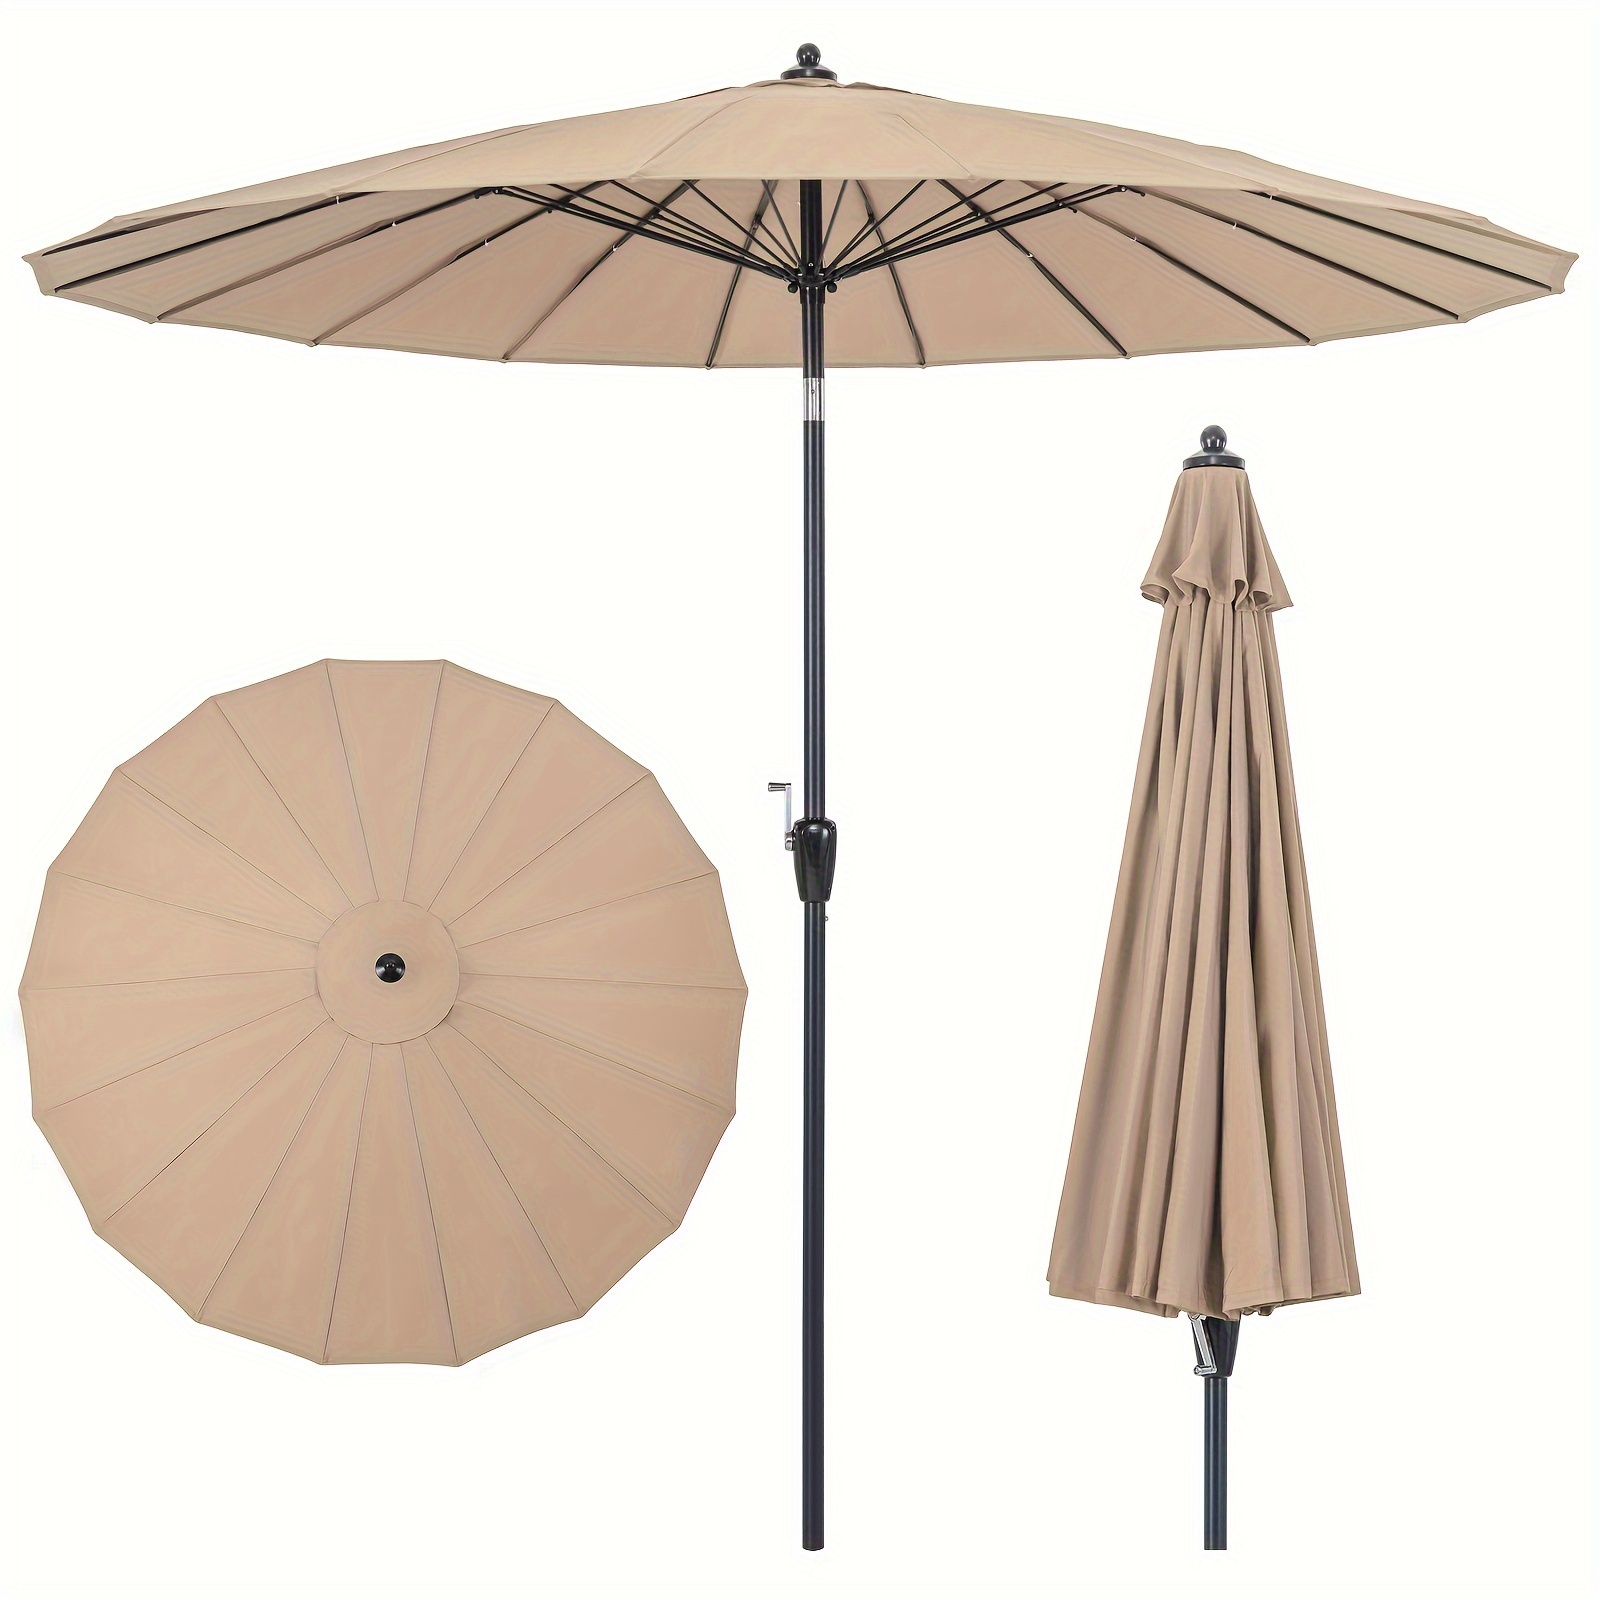 

9 Ft Patio Round Market Umbrella W/ Push Button Tilt, Crank Handle, Vented Top